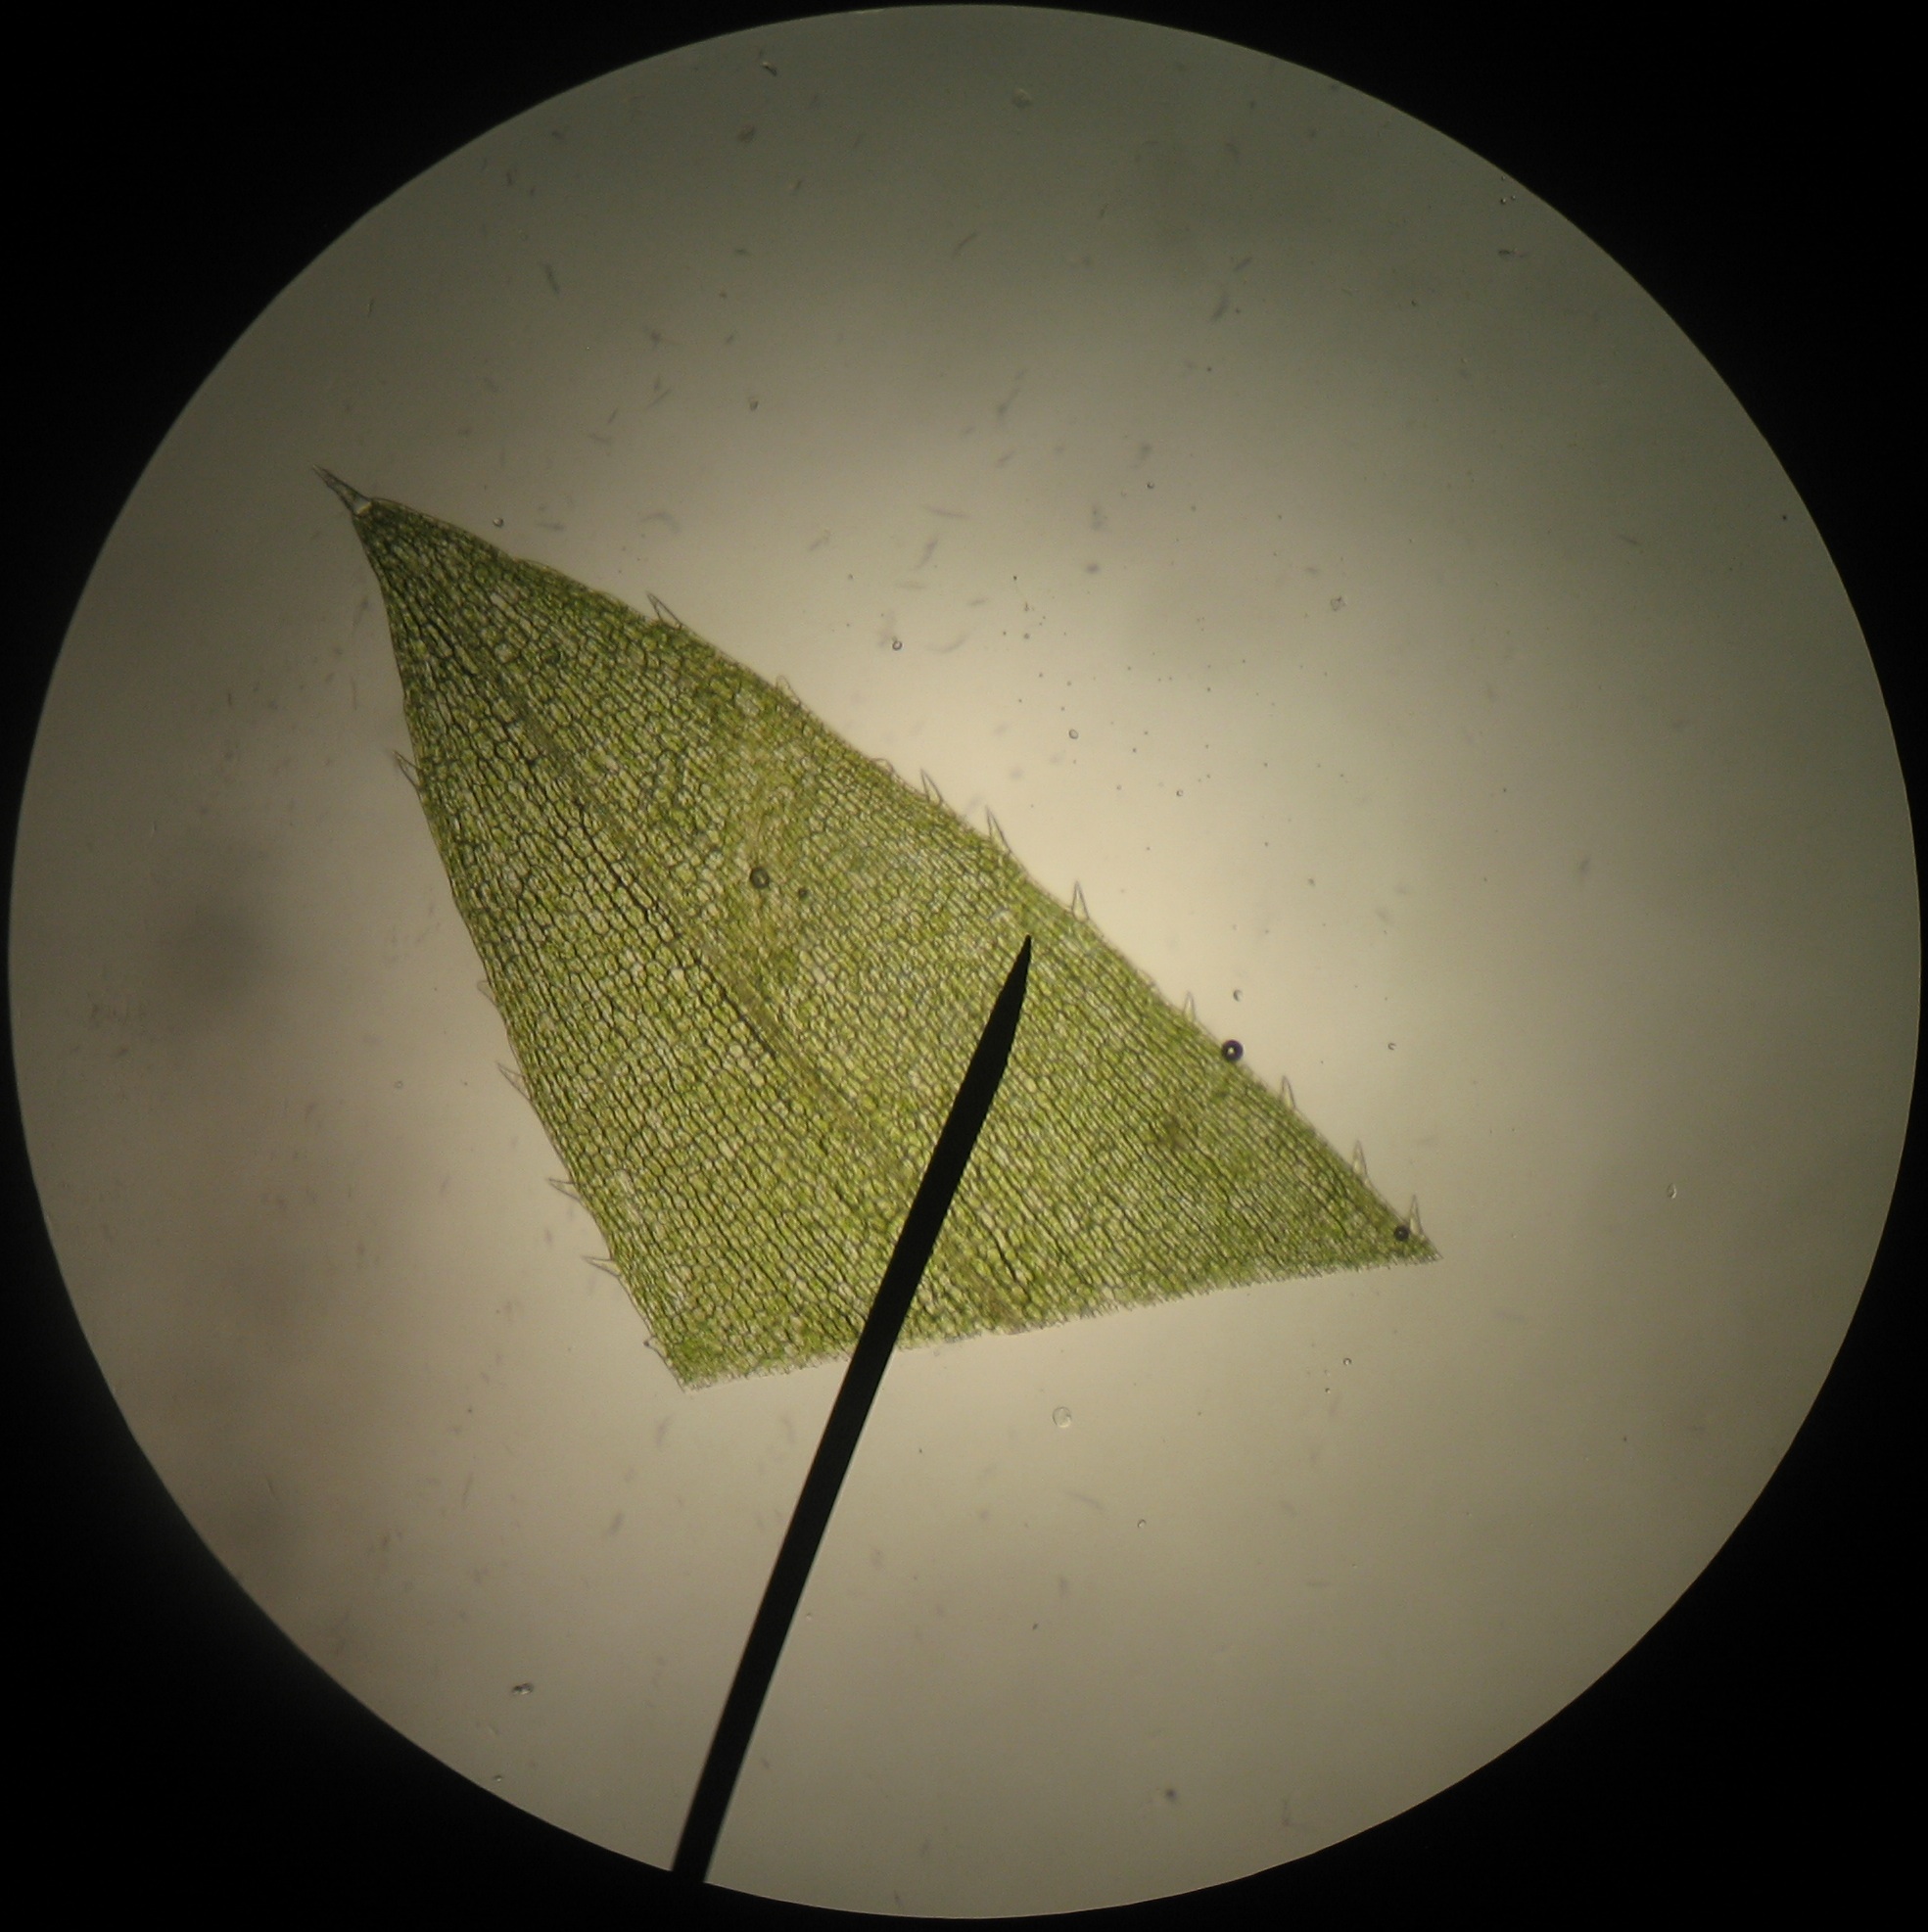 elodea leaf cell 40x